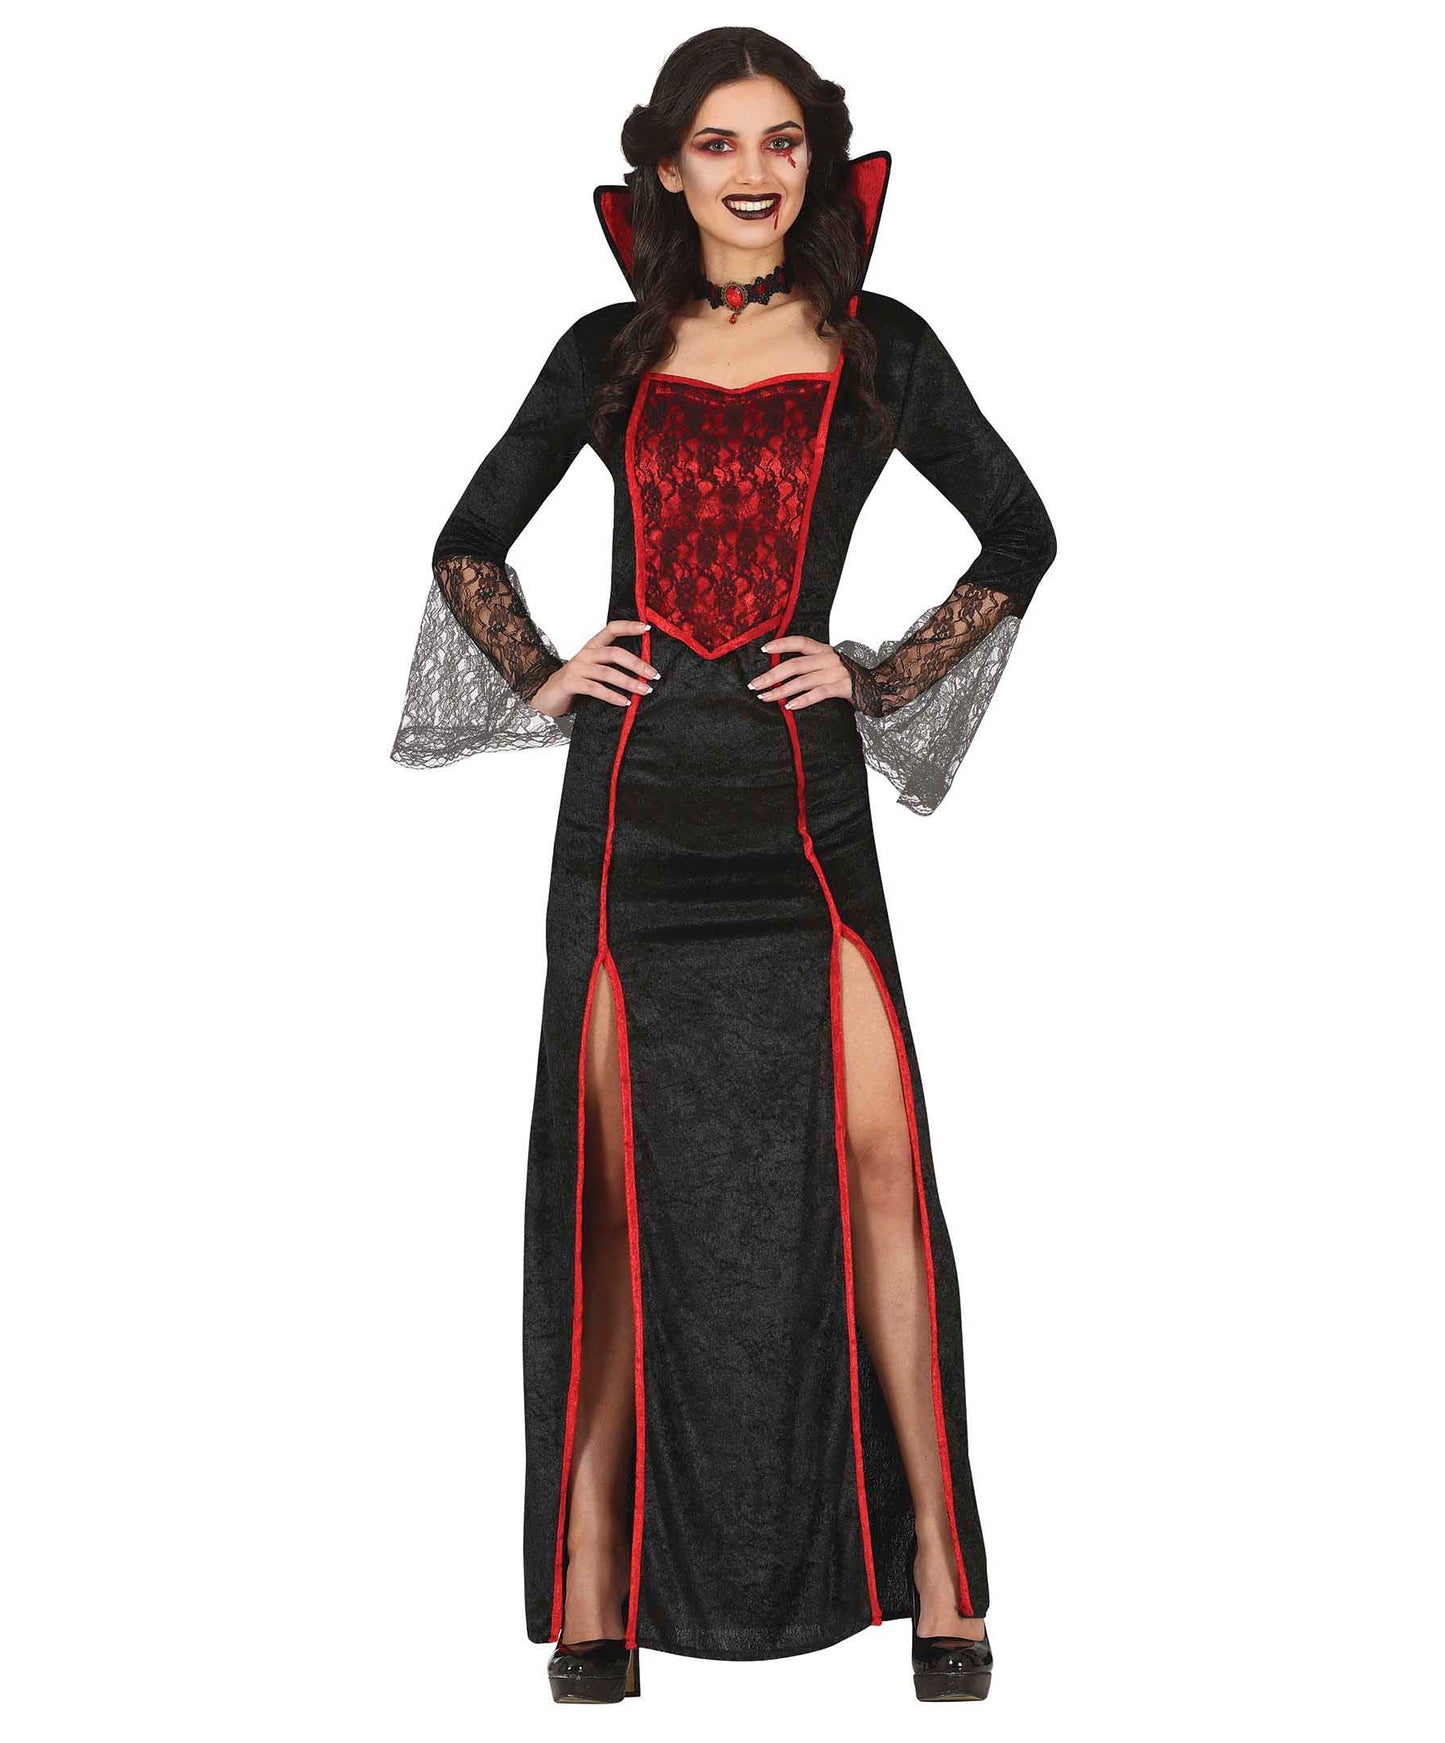 Lace Vampiress Costume